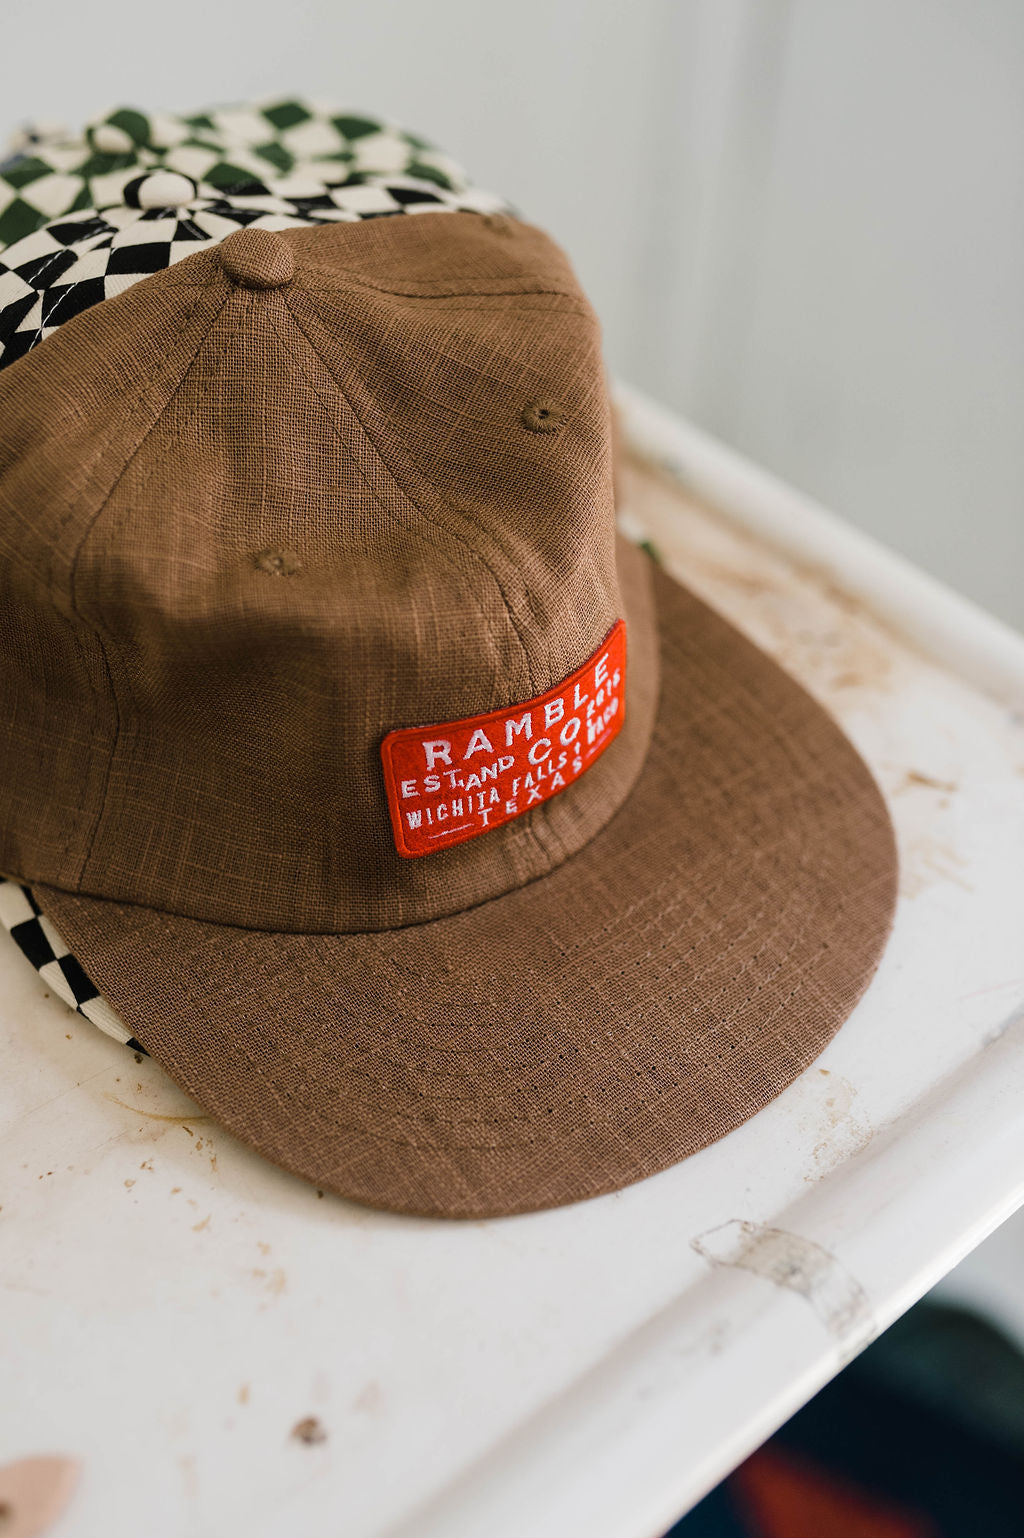 ramble & co. | field trip hemp + cotton hat